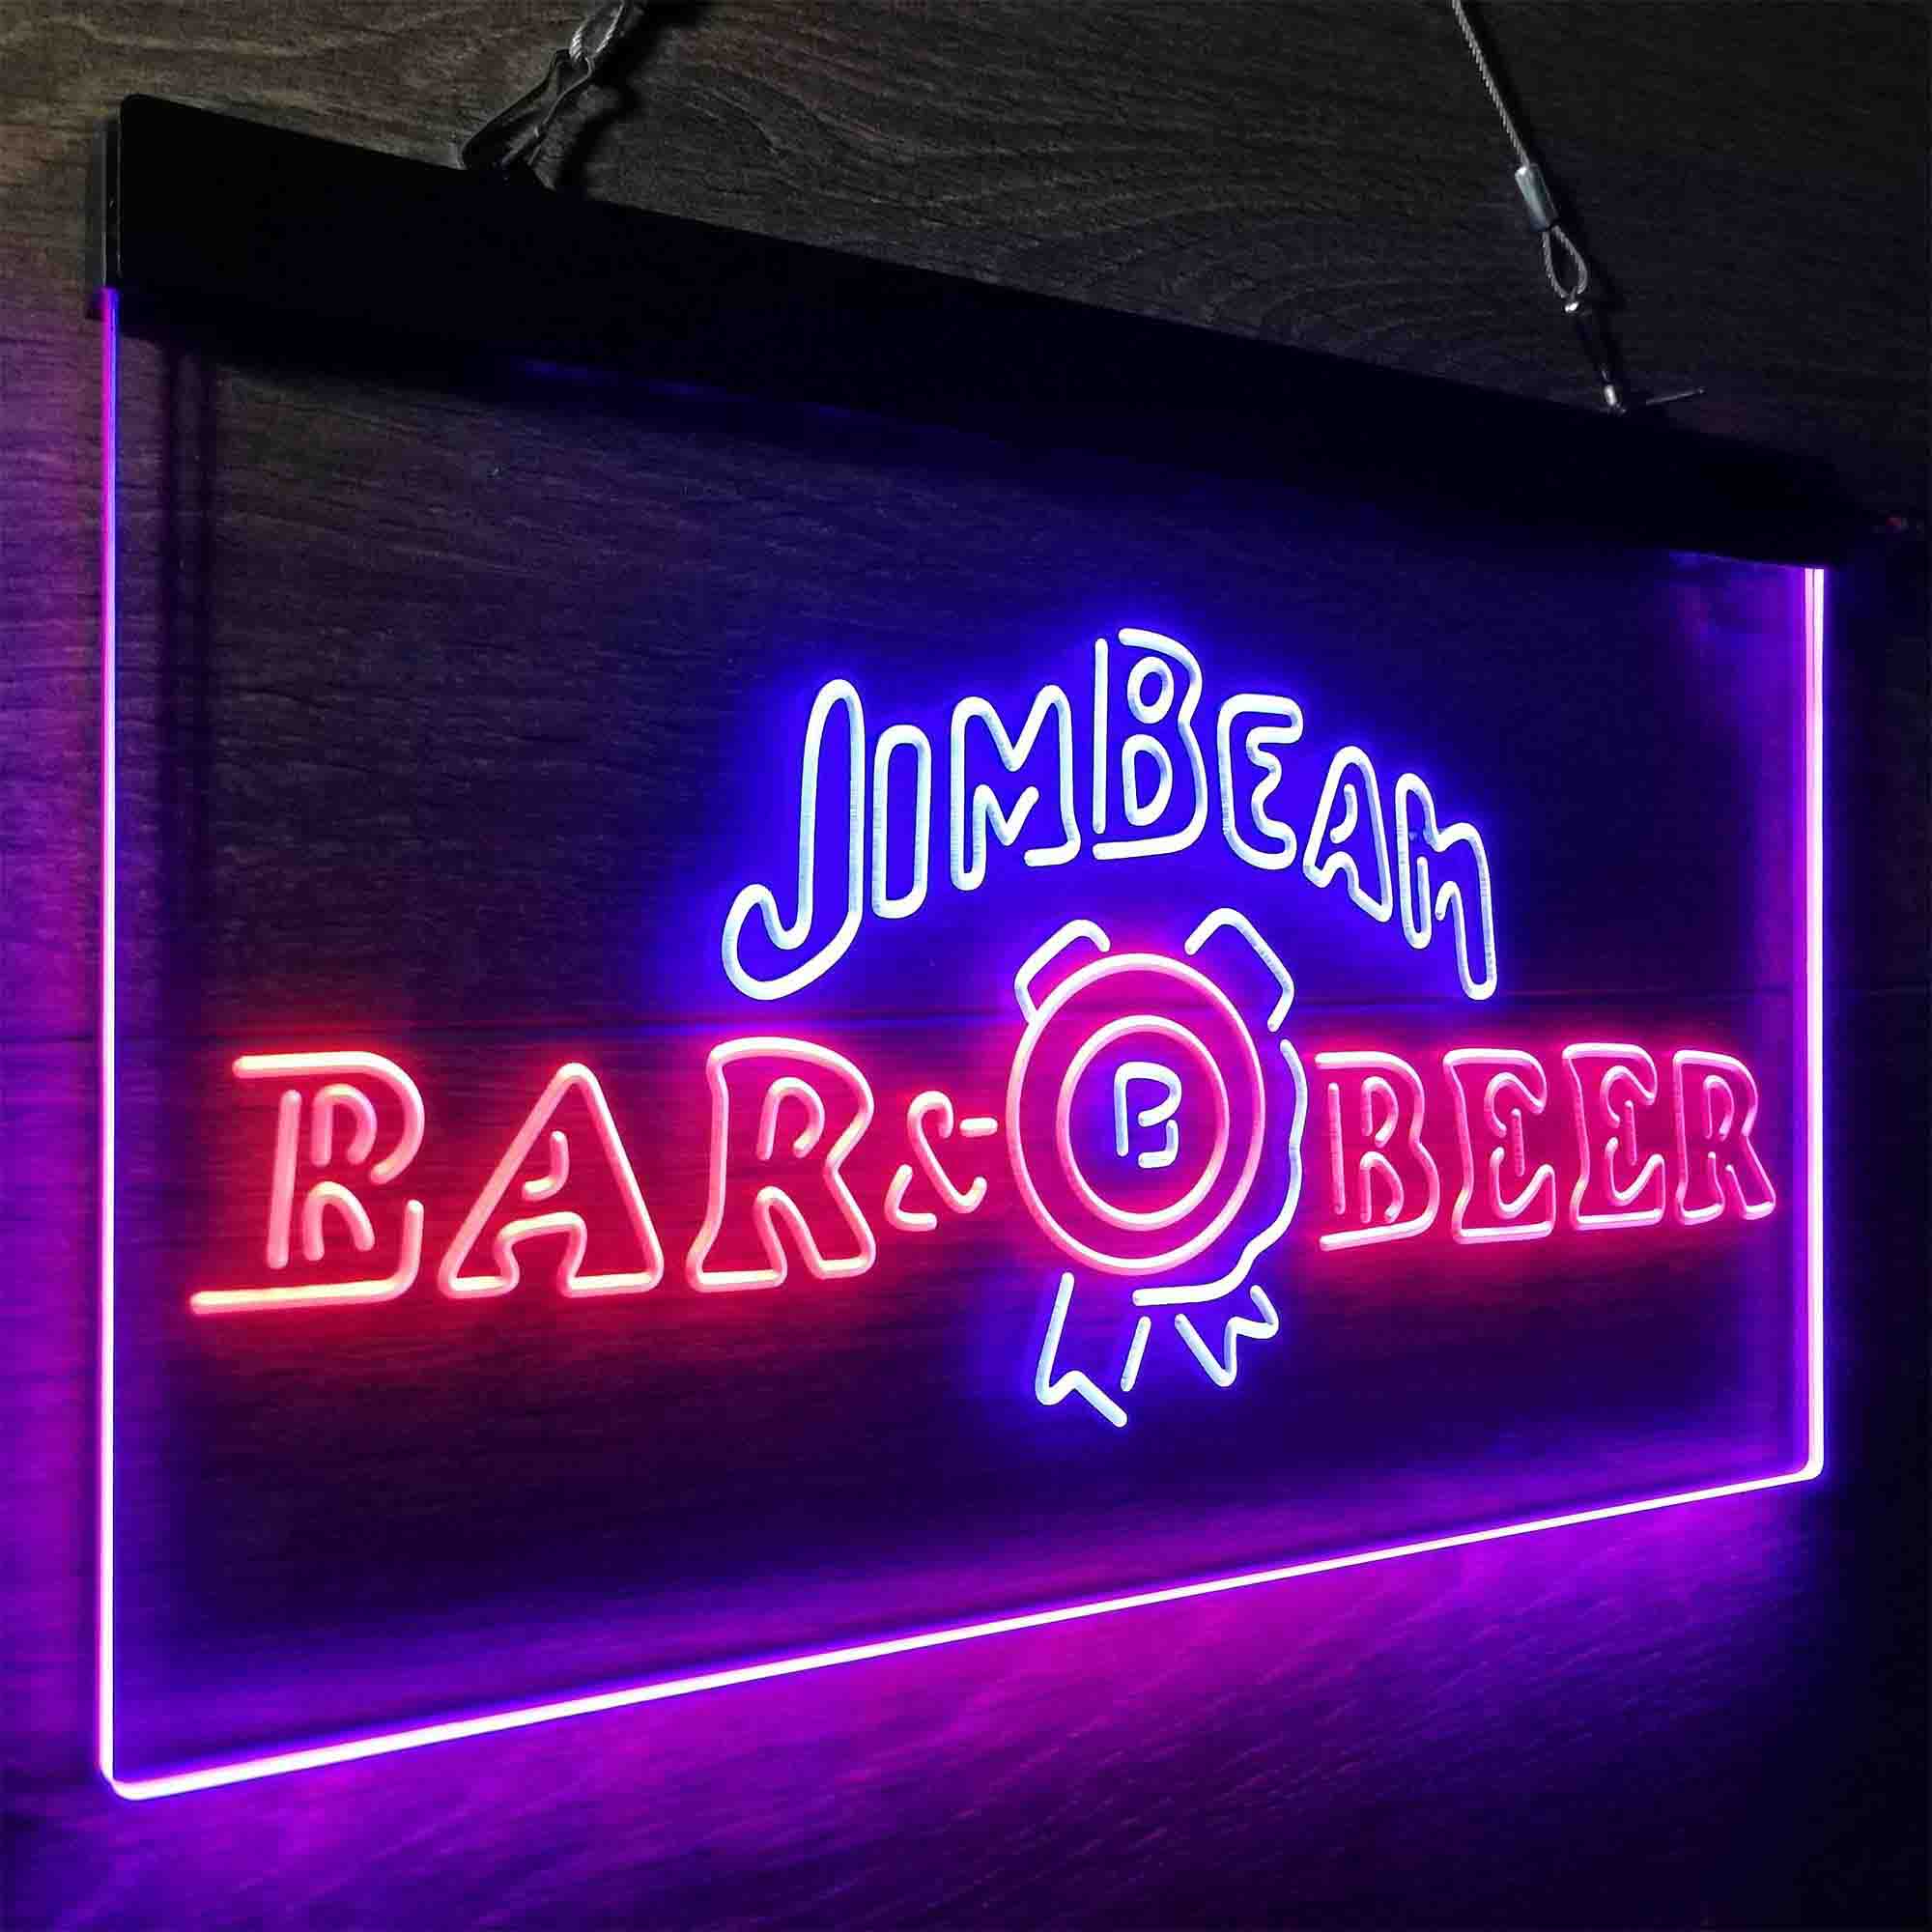 Jim Beam Bar Beer Neon-Like LED Sign